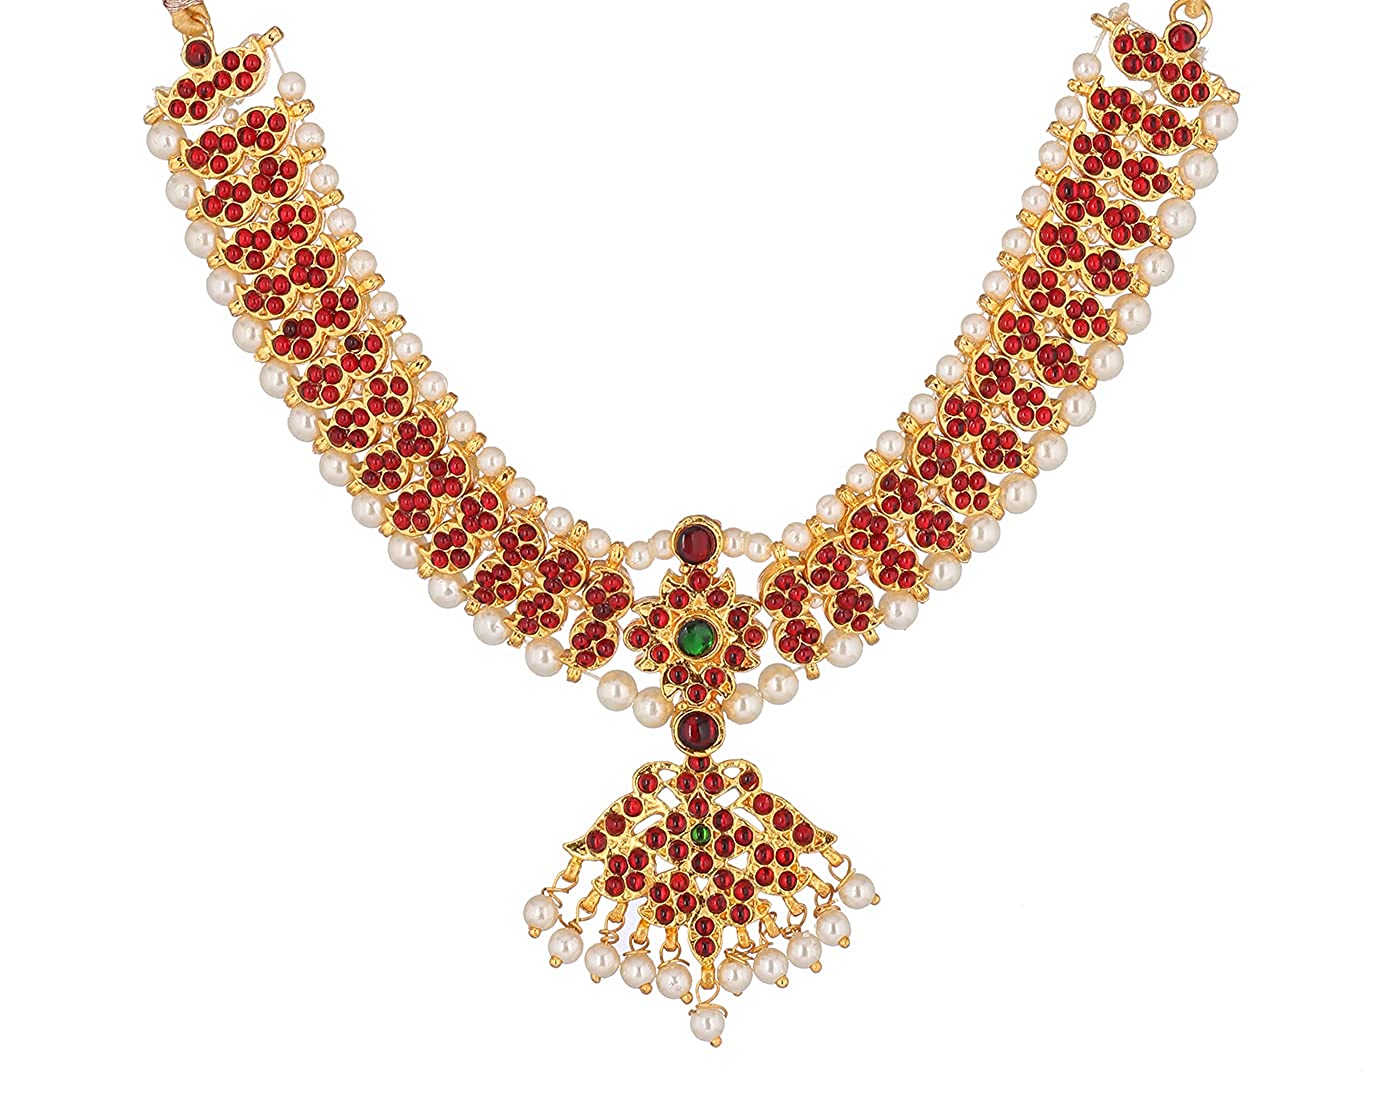 goldencollections bharatanatyam, dance. indianclaissicaldancejewellery, dance jewellery, jewelry, southindianjewellery